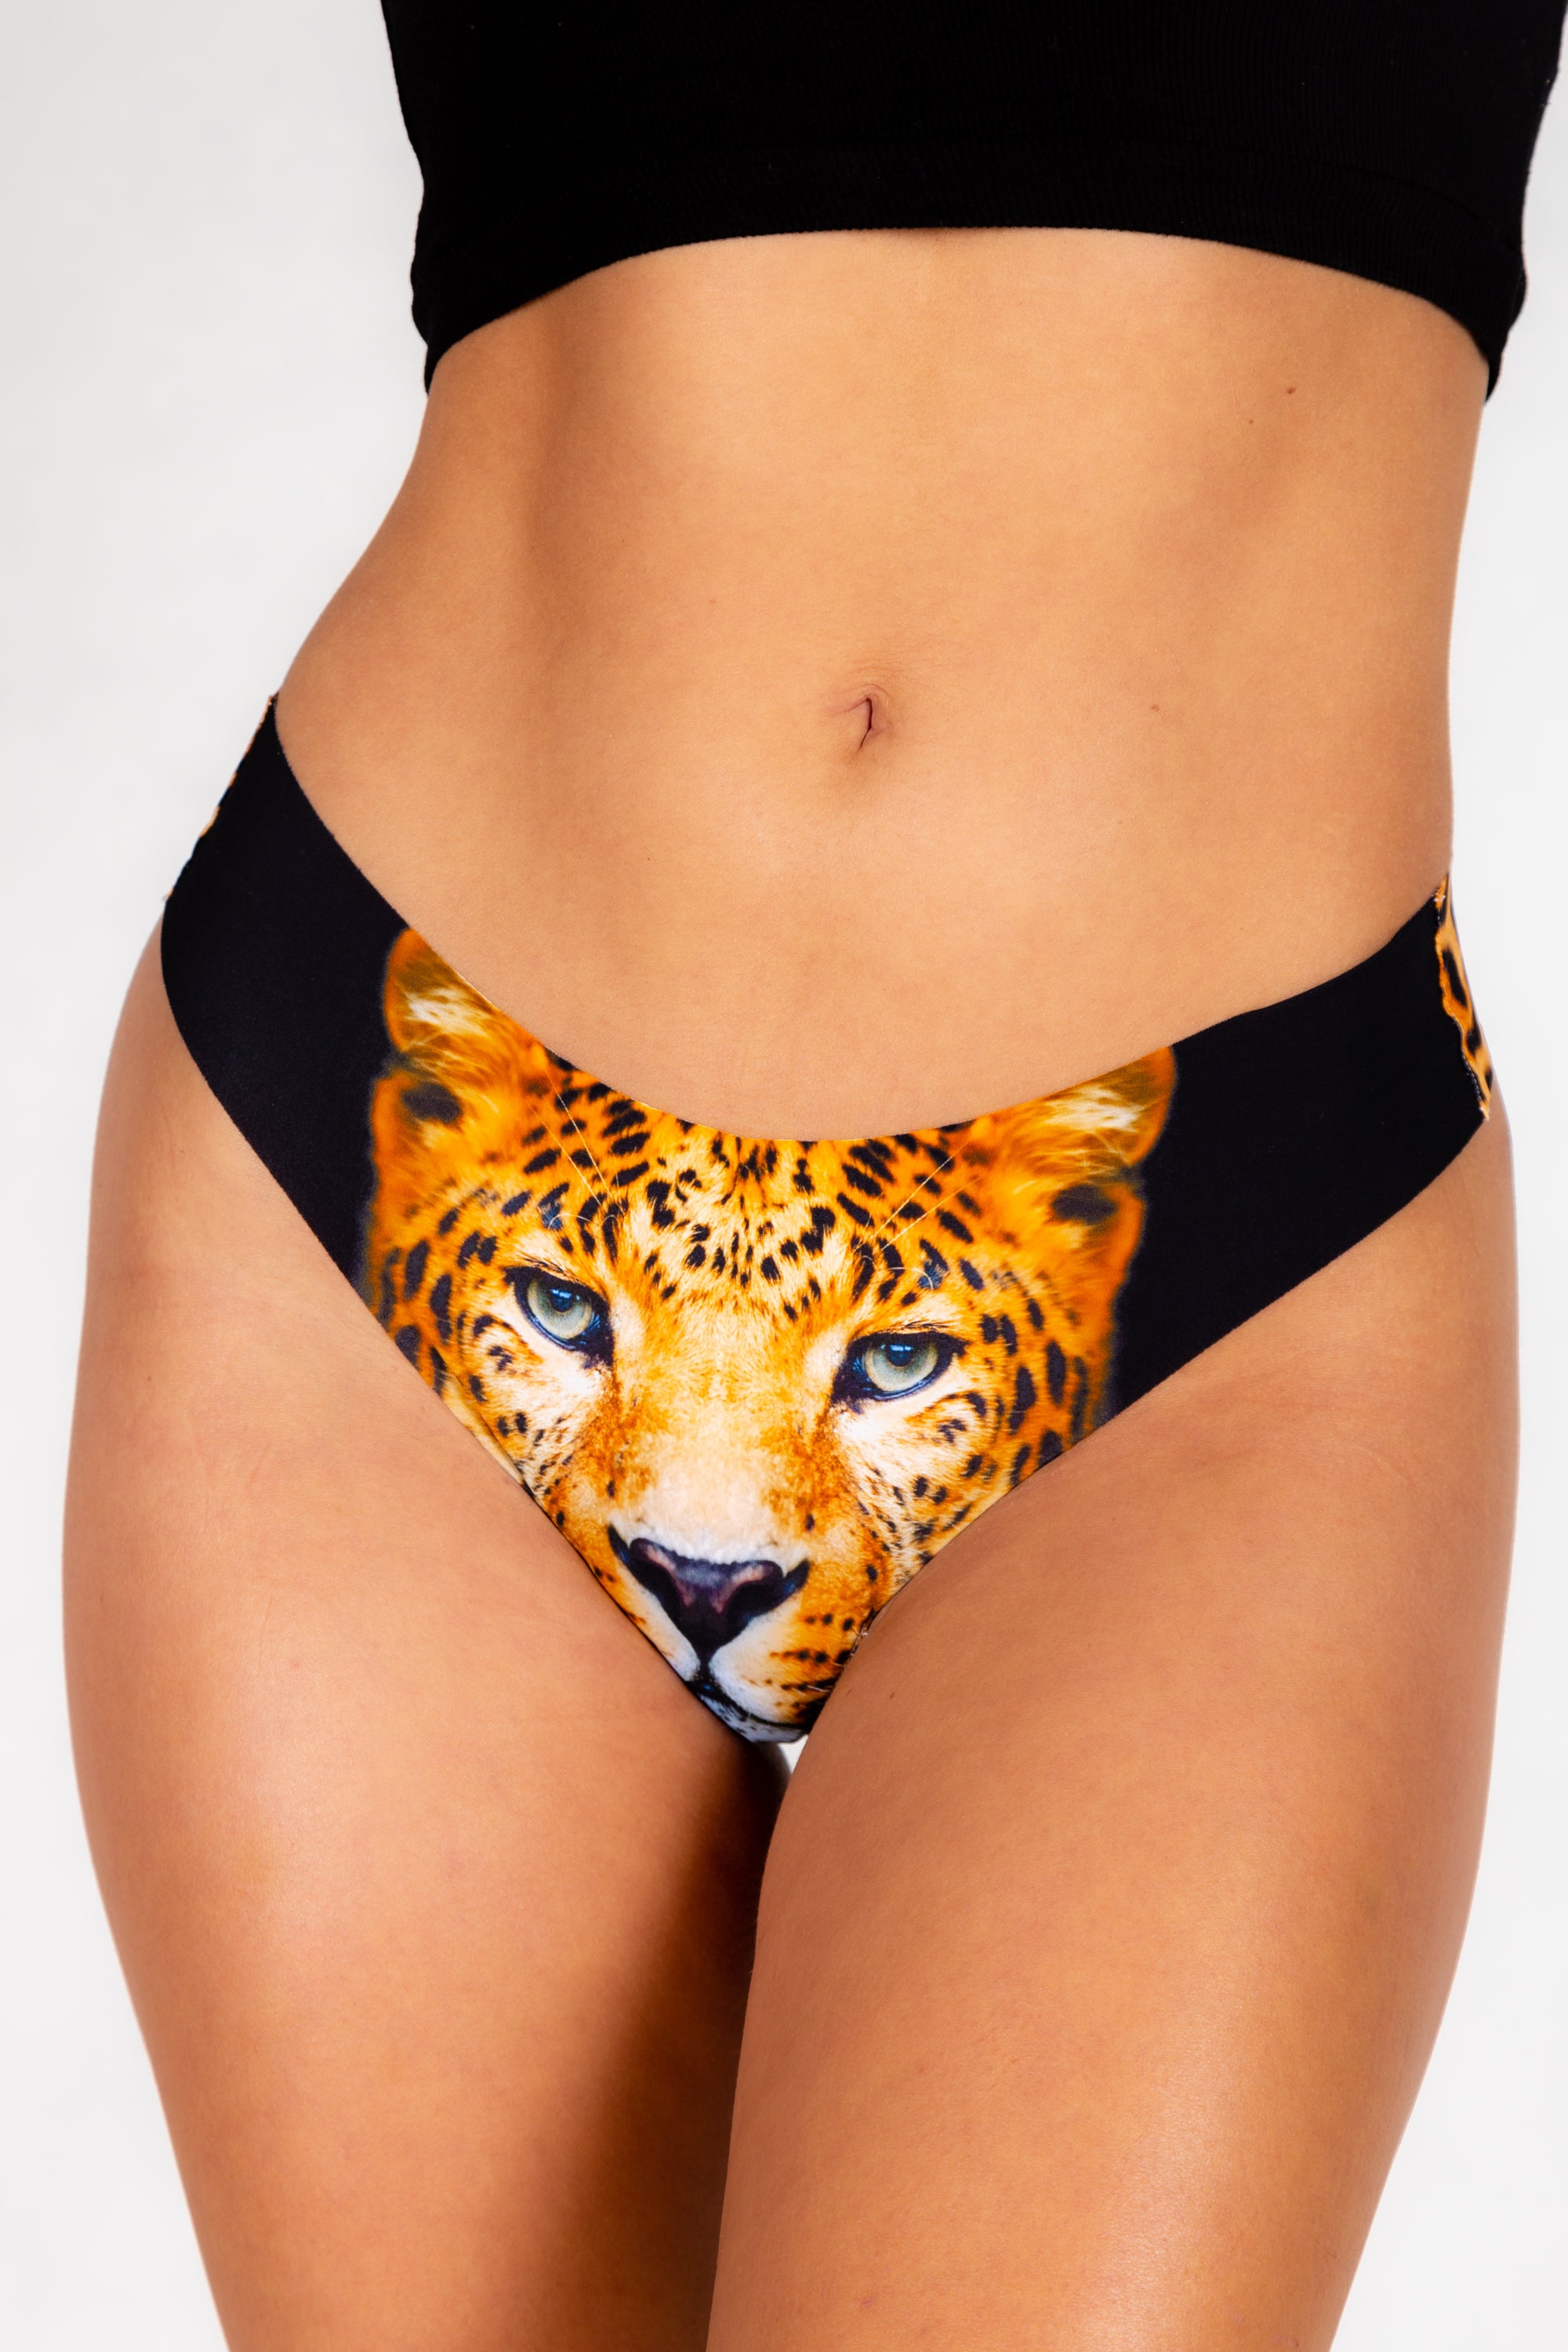 linqin Sweatproof Womens Hipster Underwear Biting Lips Leopard